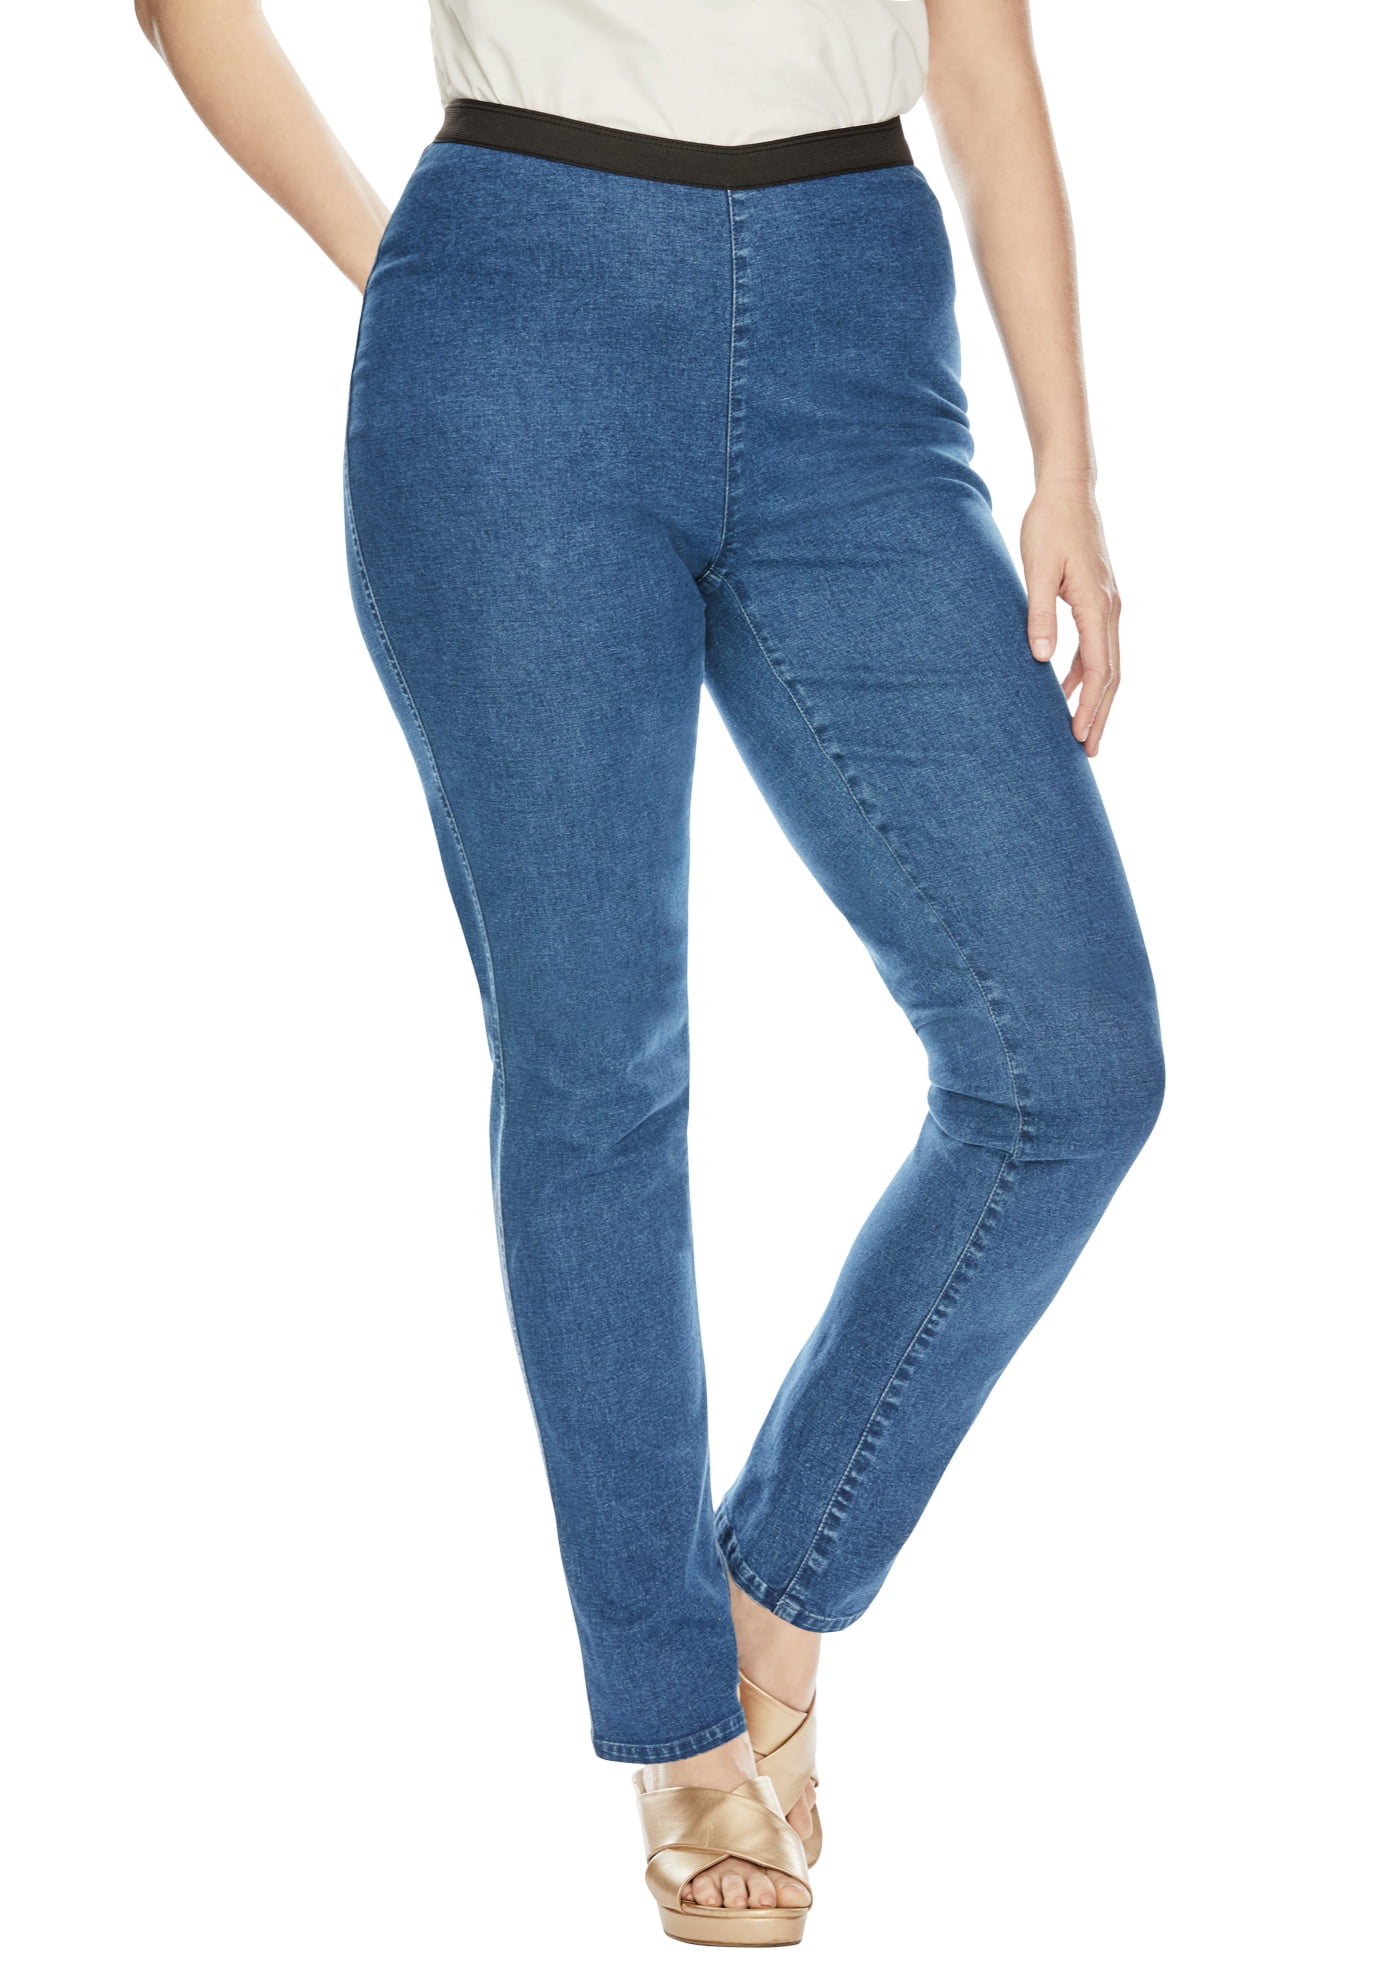 Jessica London Jessica London Women S Plus Size Tall Straight Leg Stretch Denim Jeggings Jeans